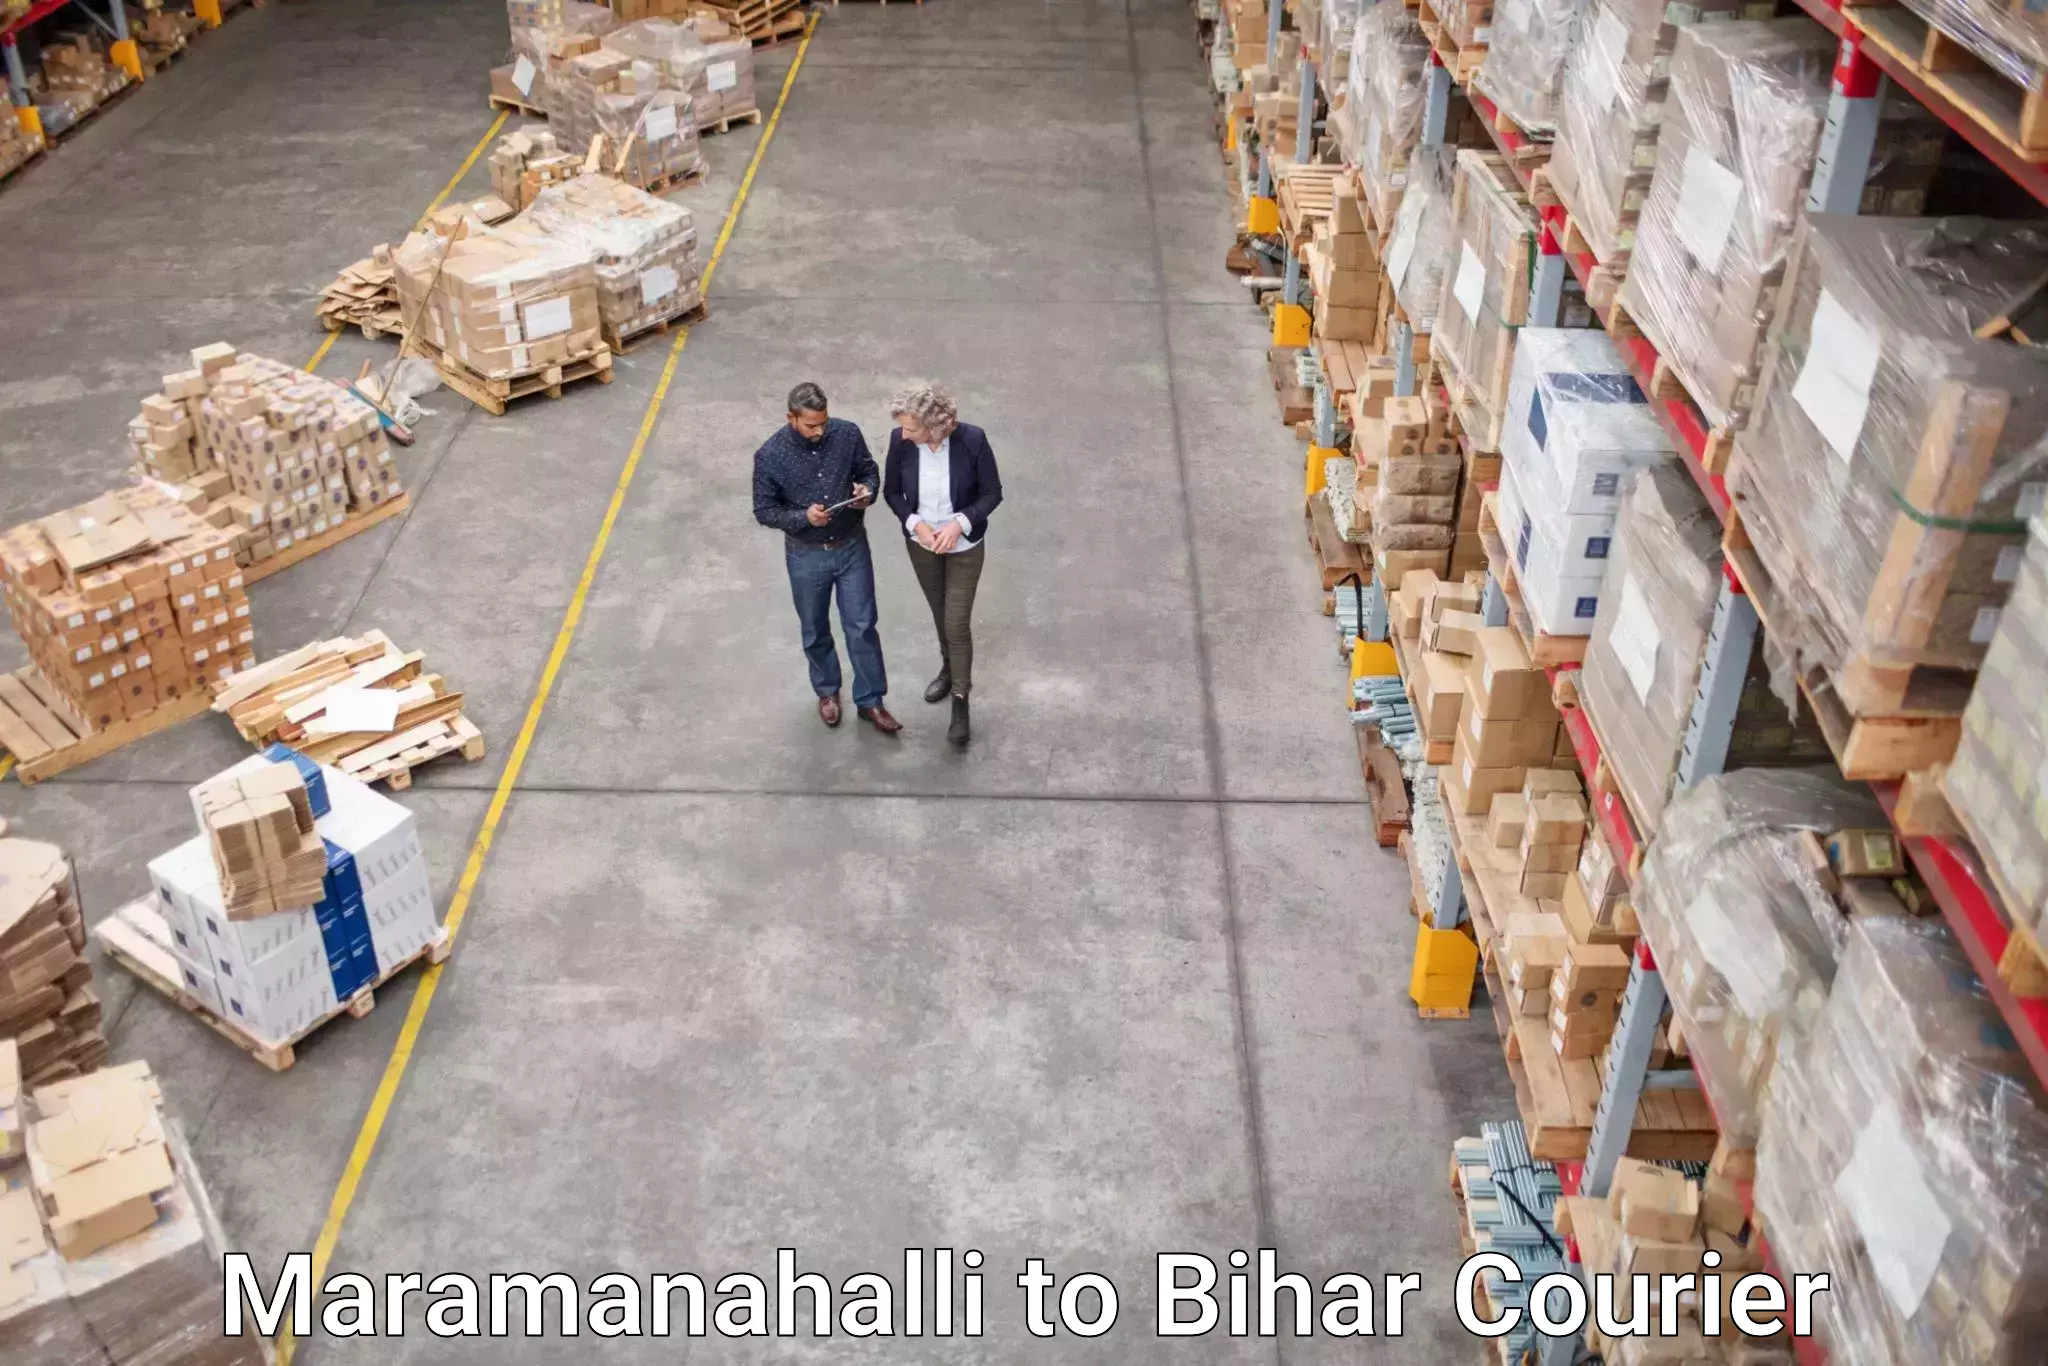 Professional courier handling Maramanahalli to Piro